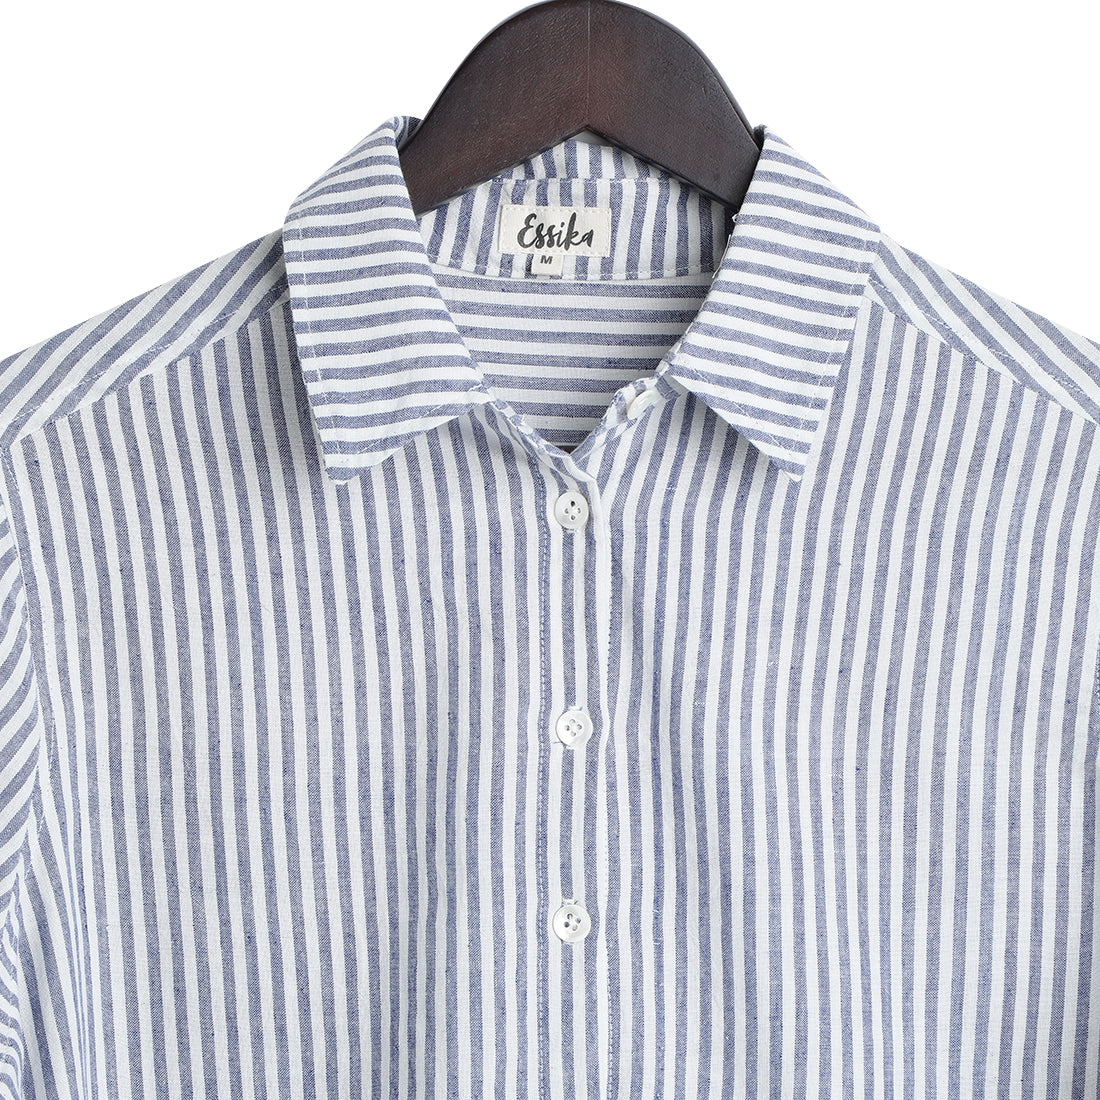 Cotton Regular Full Sleeves  Blue Stripes Shirt - Close up Image 